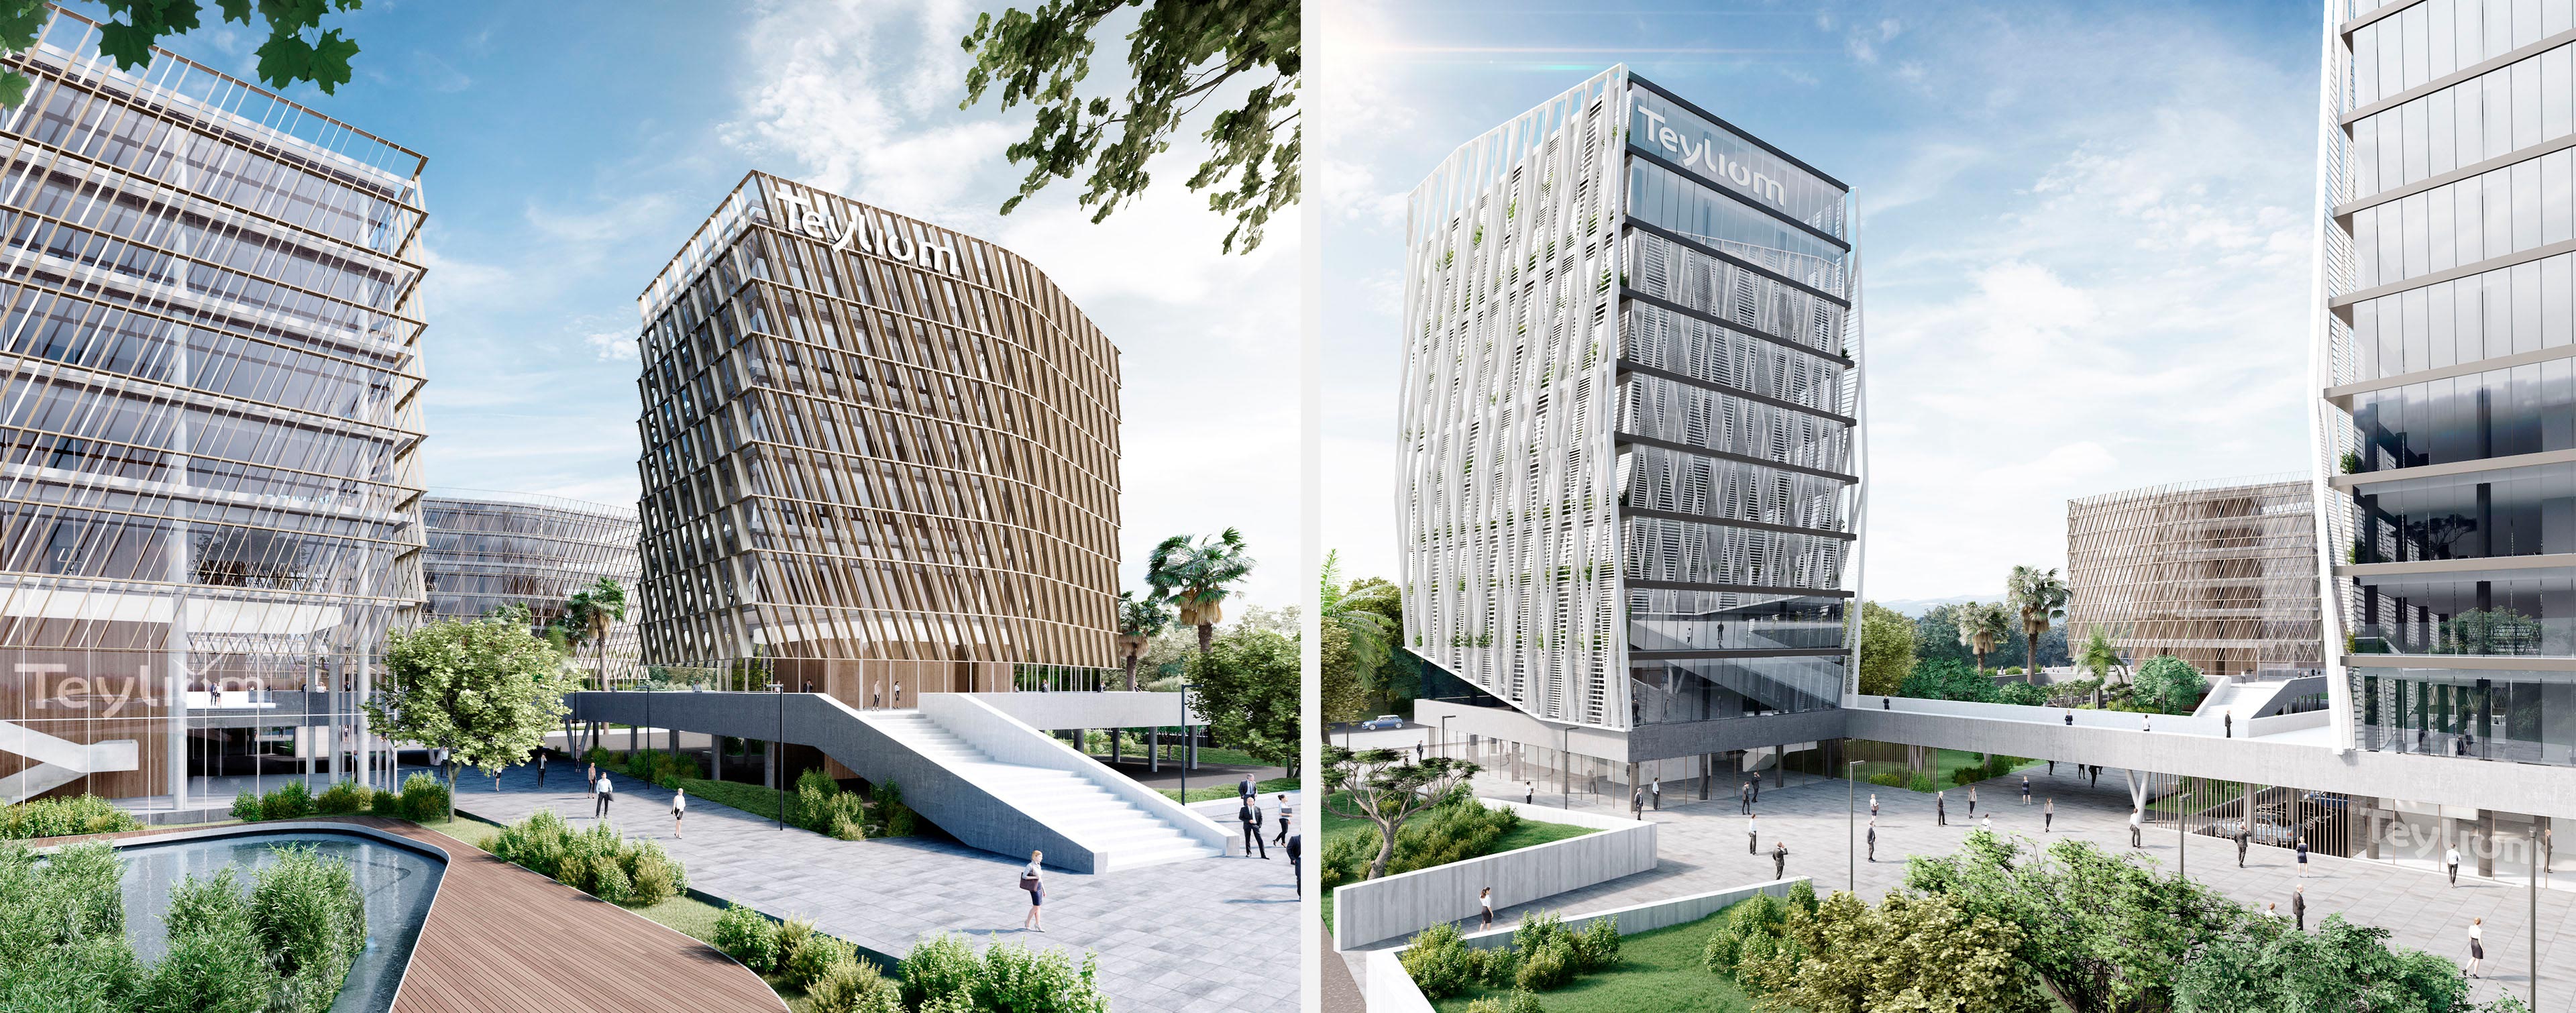 luv studio luxury architects dakkar epycentre business park building IMG 01 - LUV Studio - Architecture et design - Barcelone